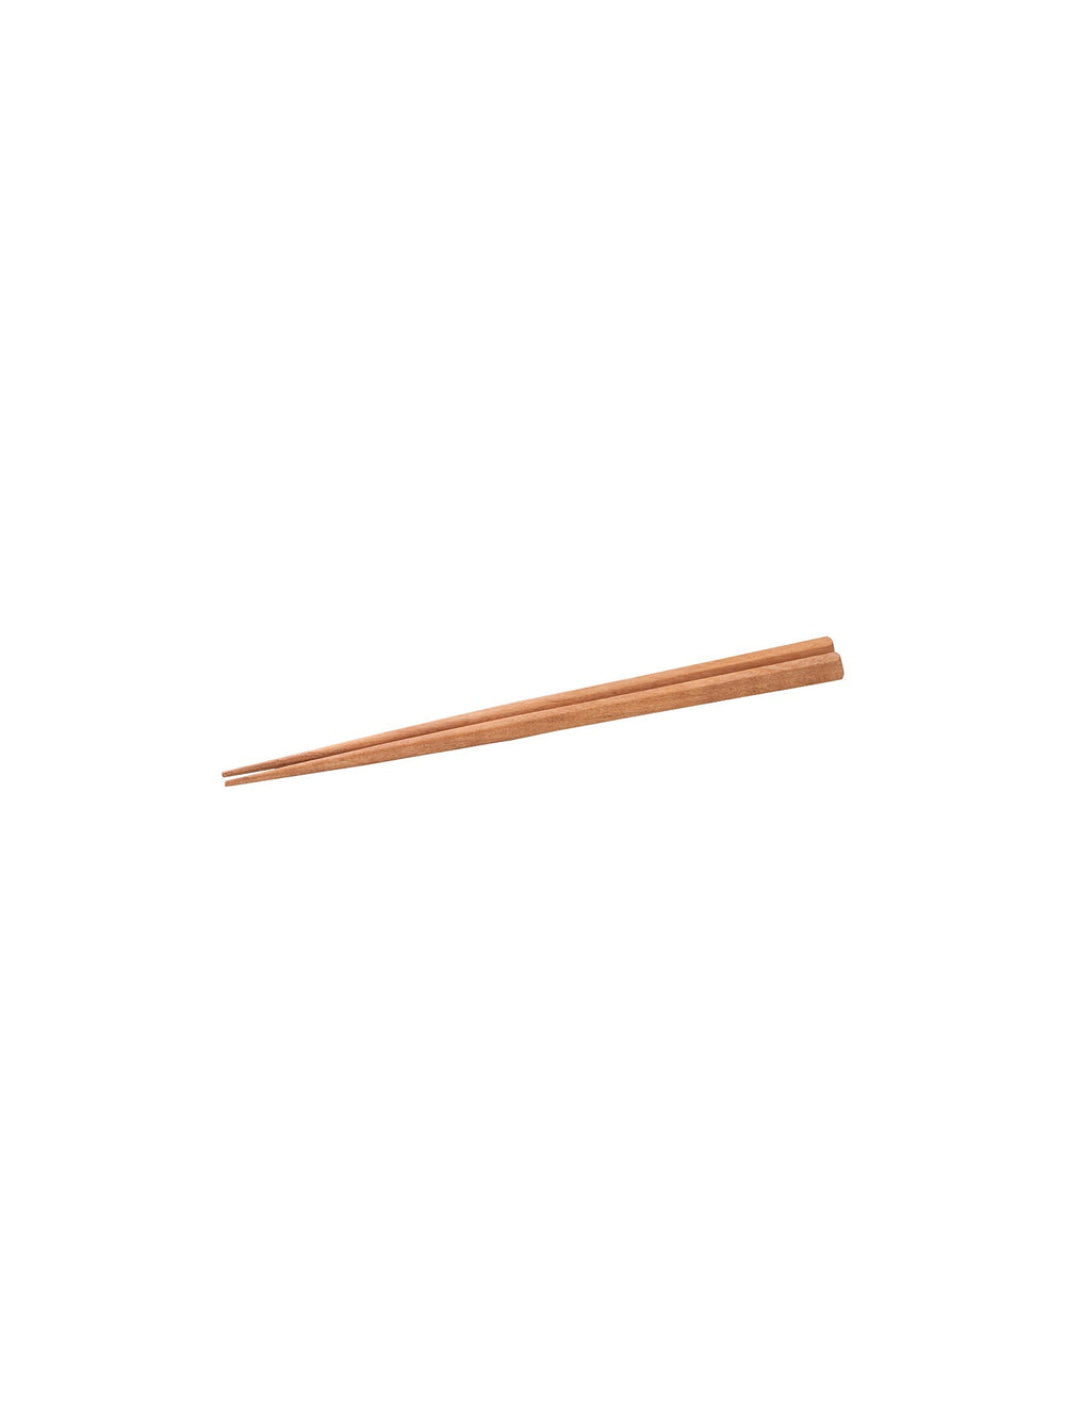 KINTO HIBI Chopsticks (180mm/7.2in)